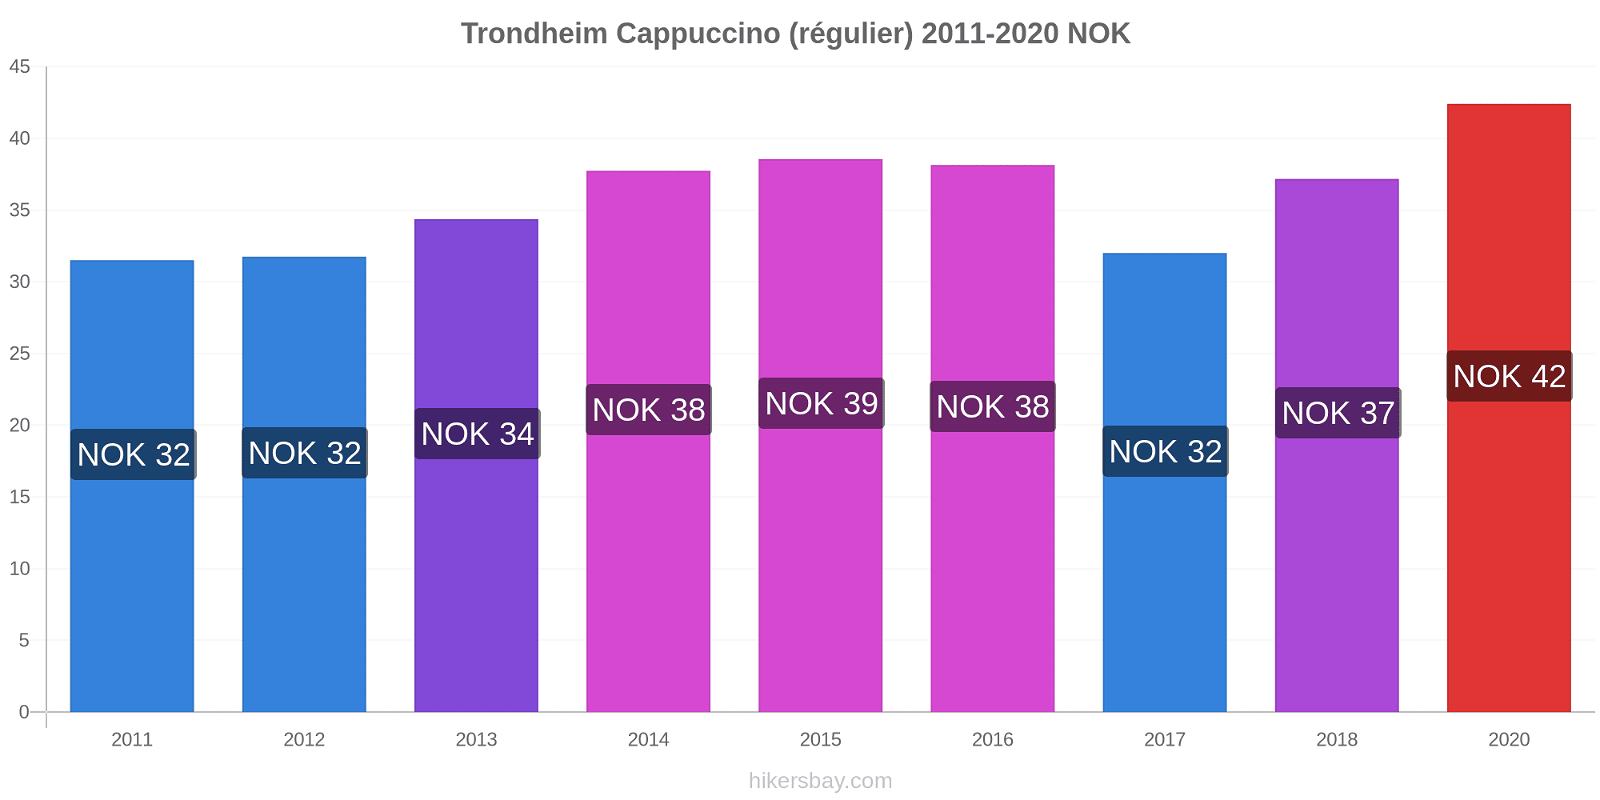 Trondheim changements de prix Cappuccino (régulier) hikersbay.com